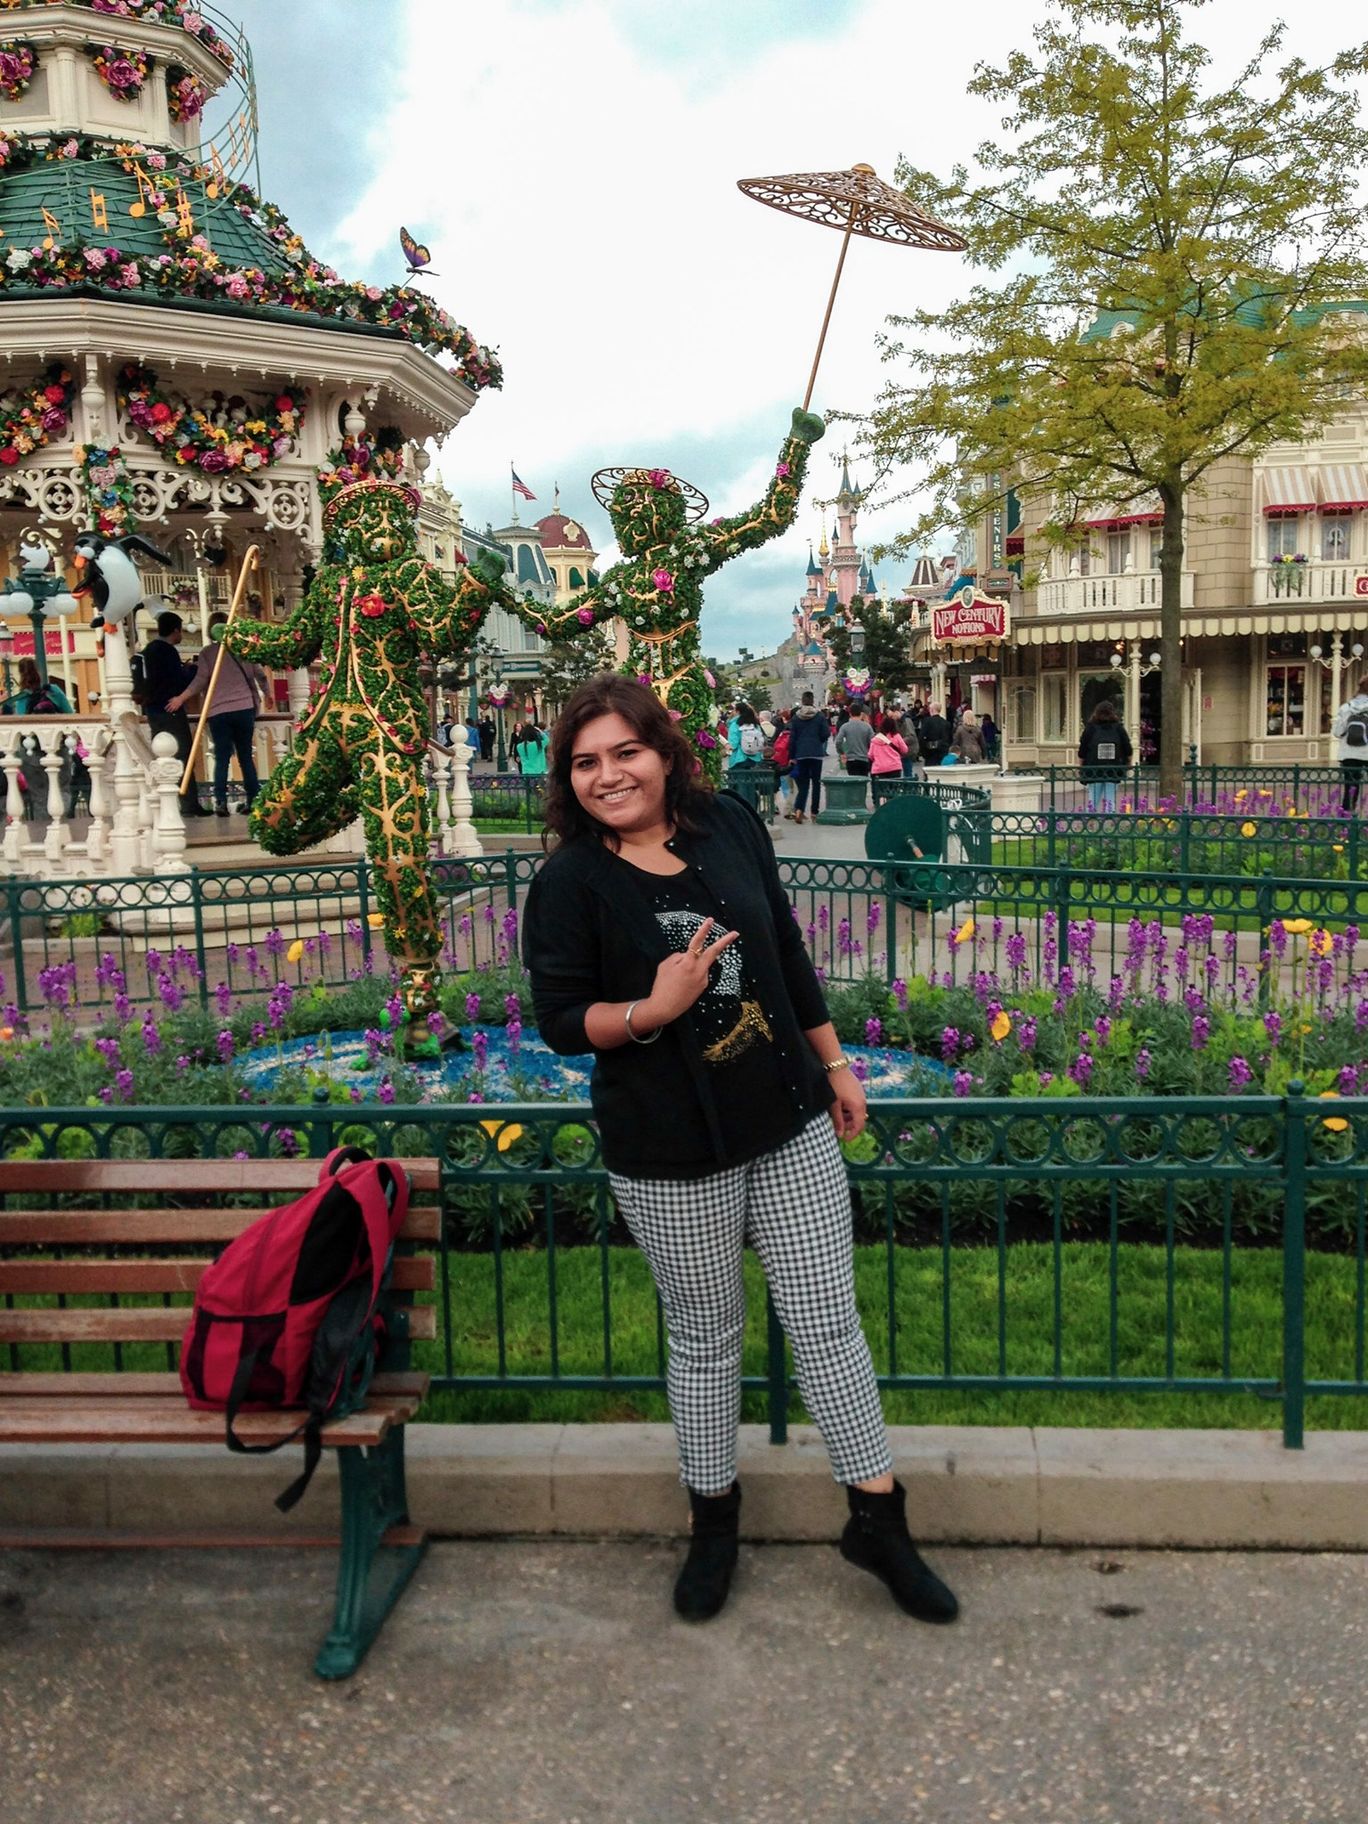 Photo of Disneyland Paris By Tanushree Jain